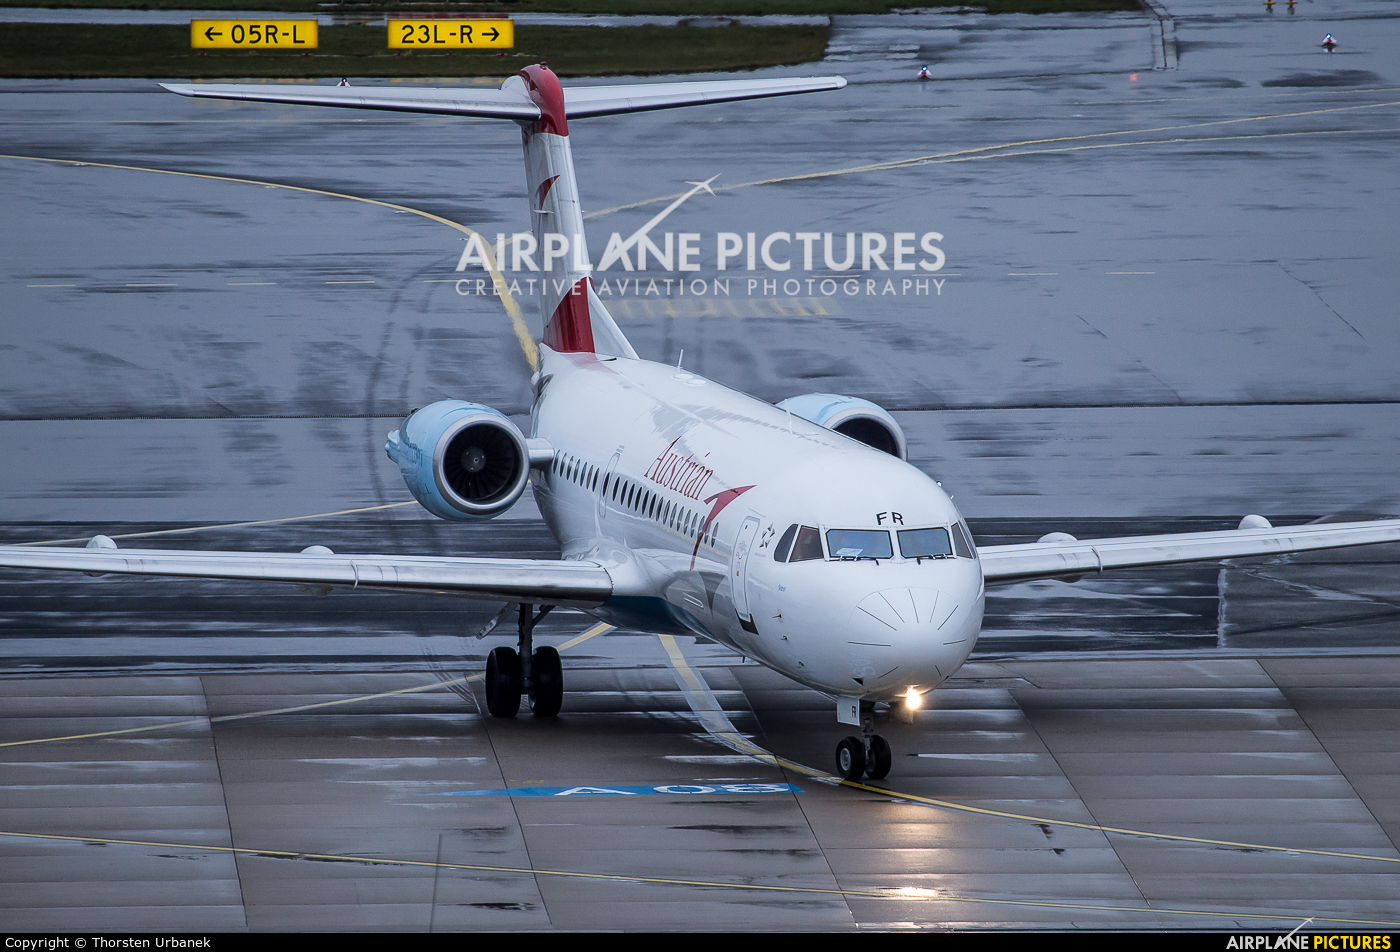 Austrian Airlines/Arrows/Tyrolean OE-LFR aircraft at Düsseldorf